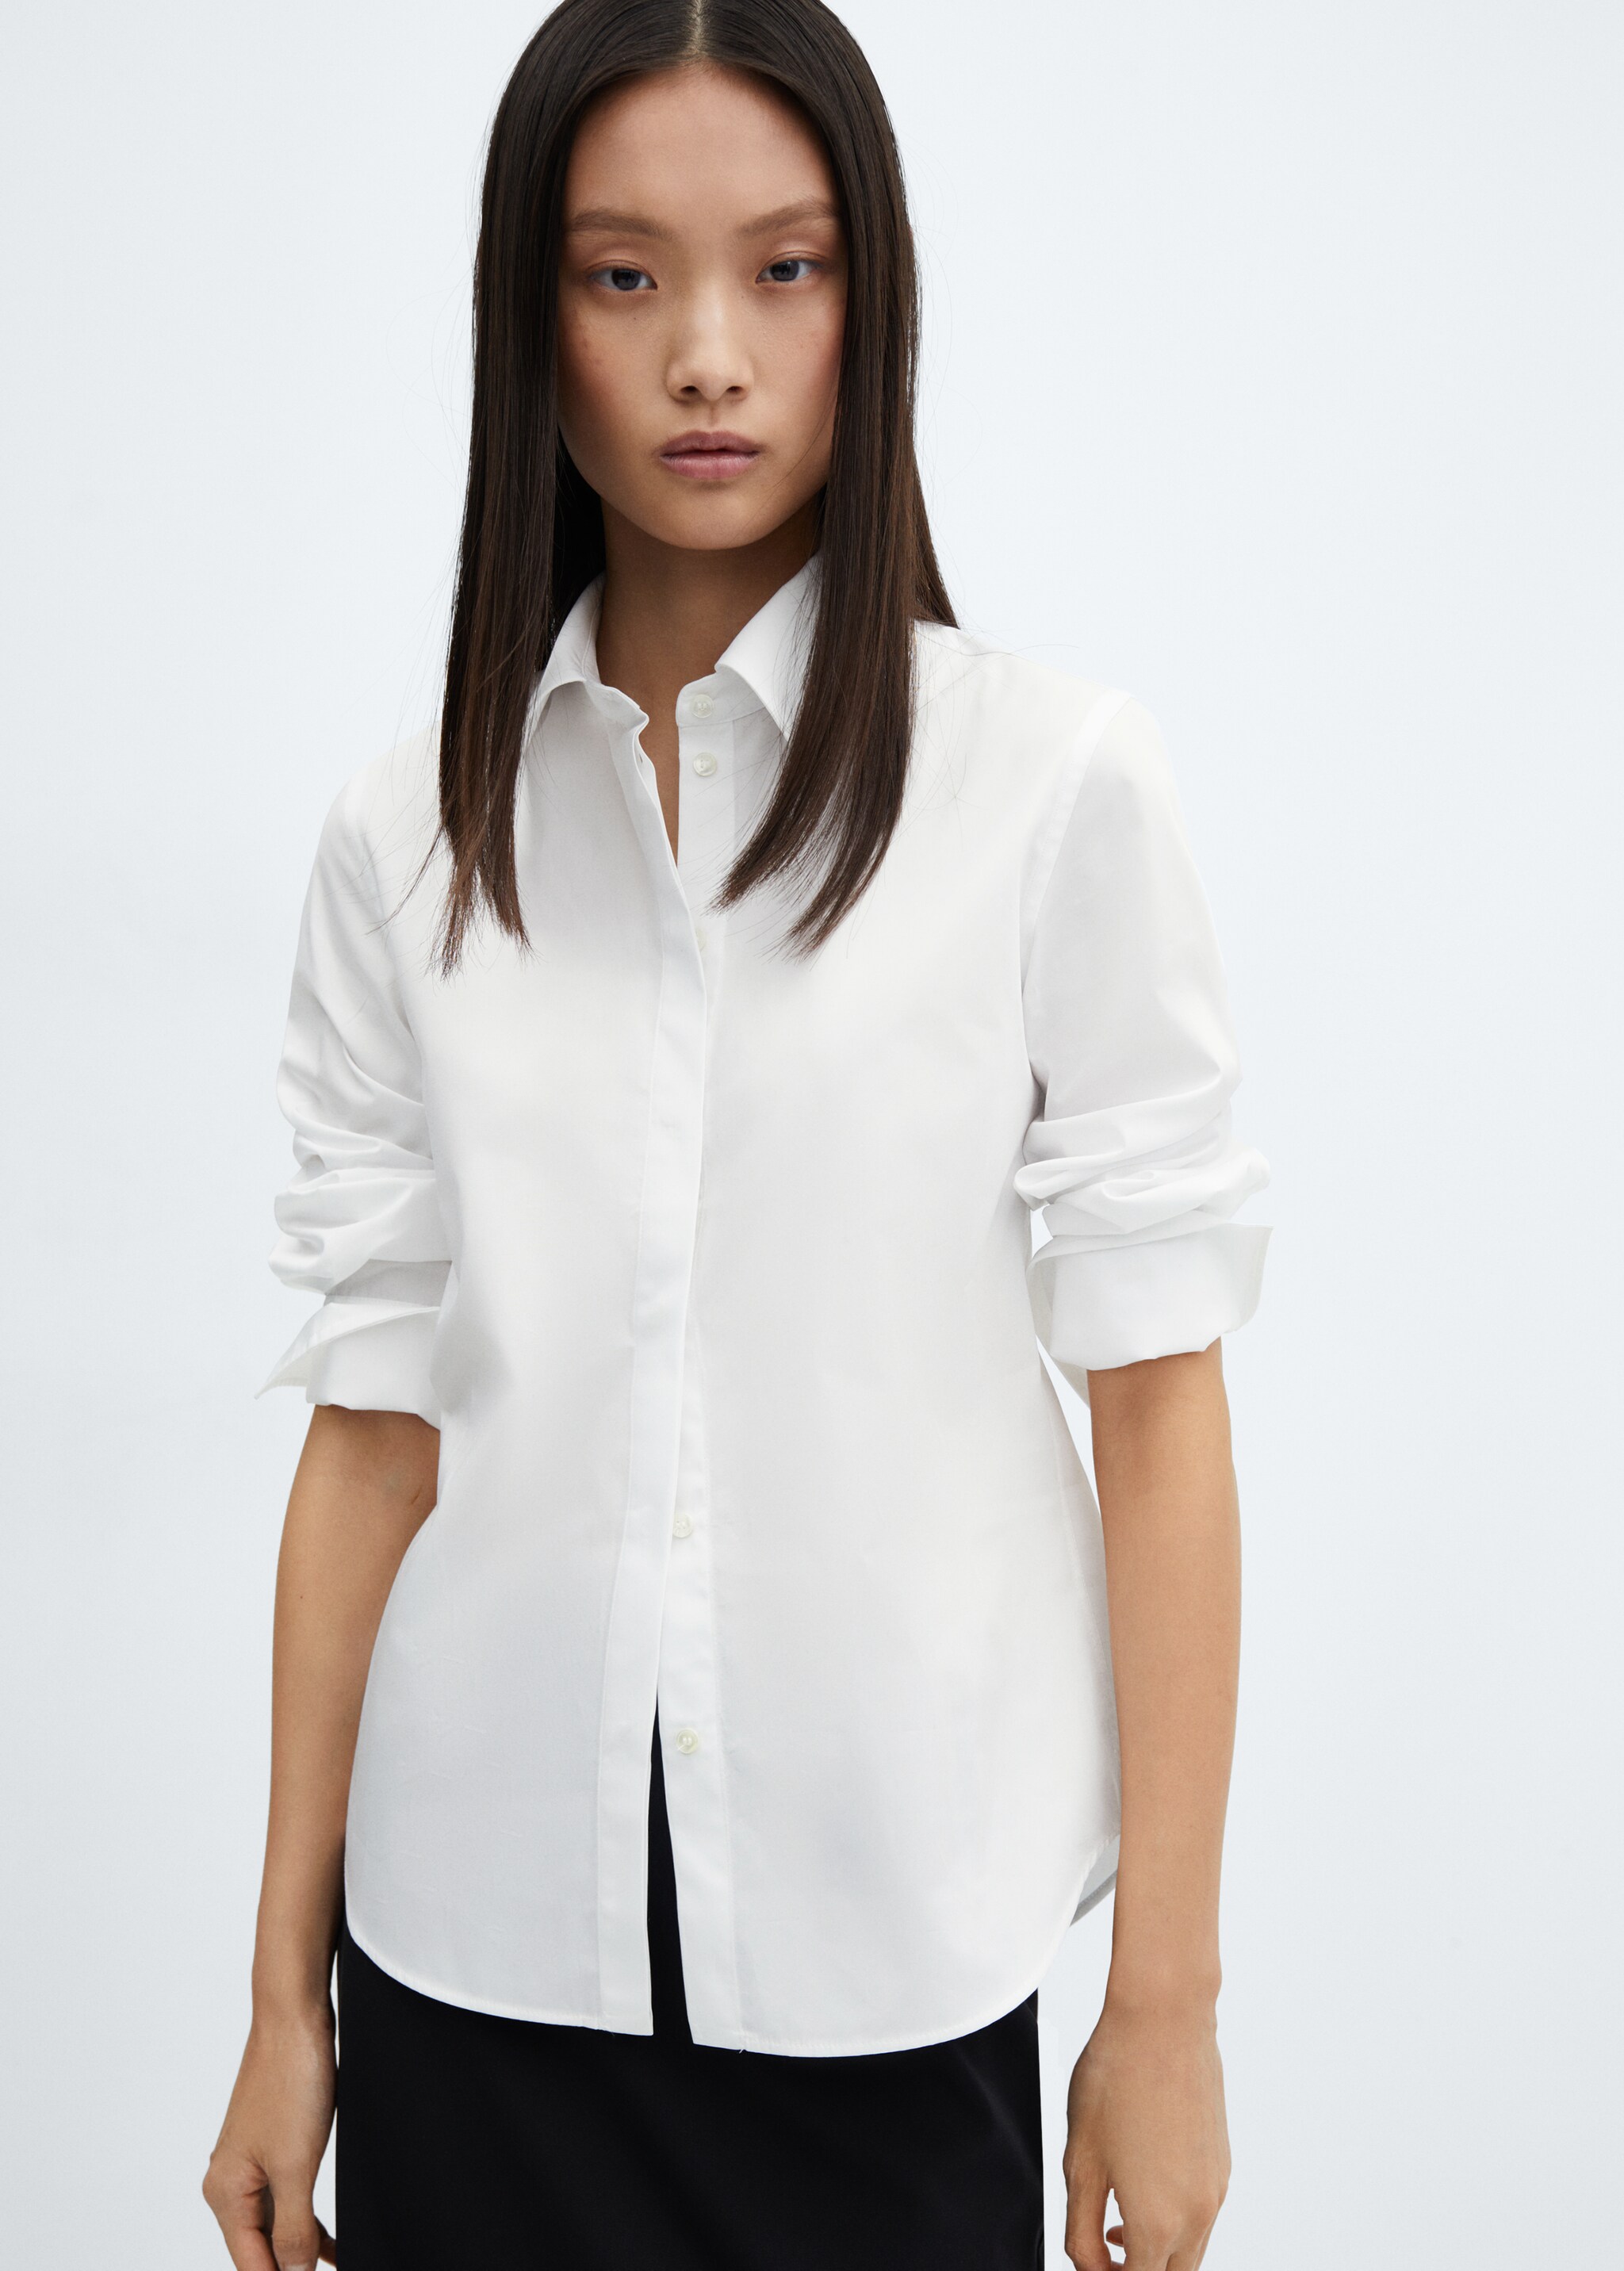 Cotton shirt with jewel buttons - Medium plane